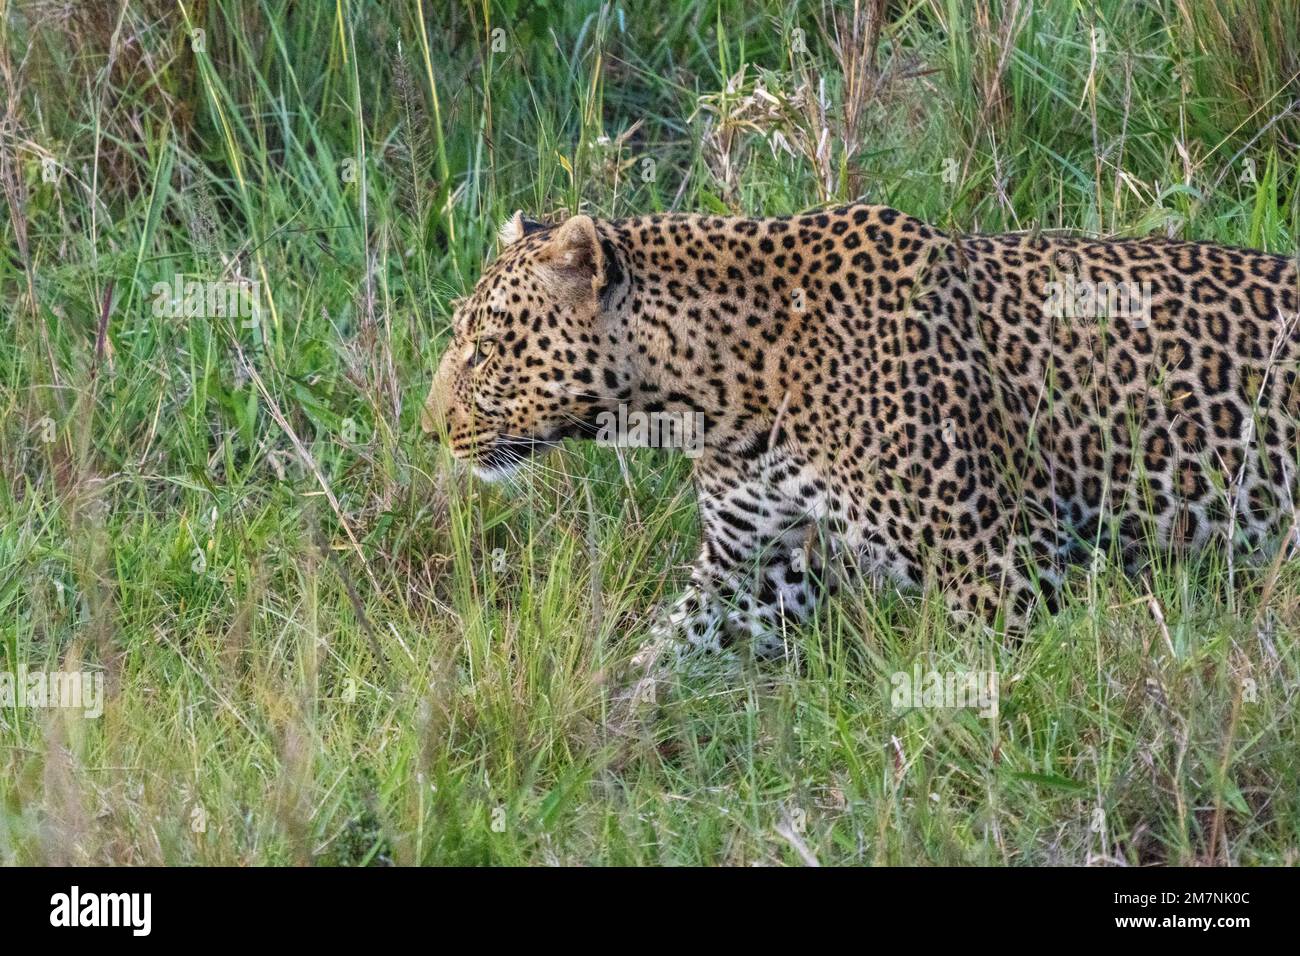 léopard marchant dans de l'herbe longue, parc national de Masai Mara, Kenya Banque D'Images